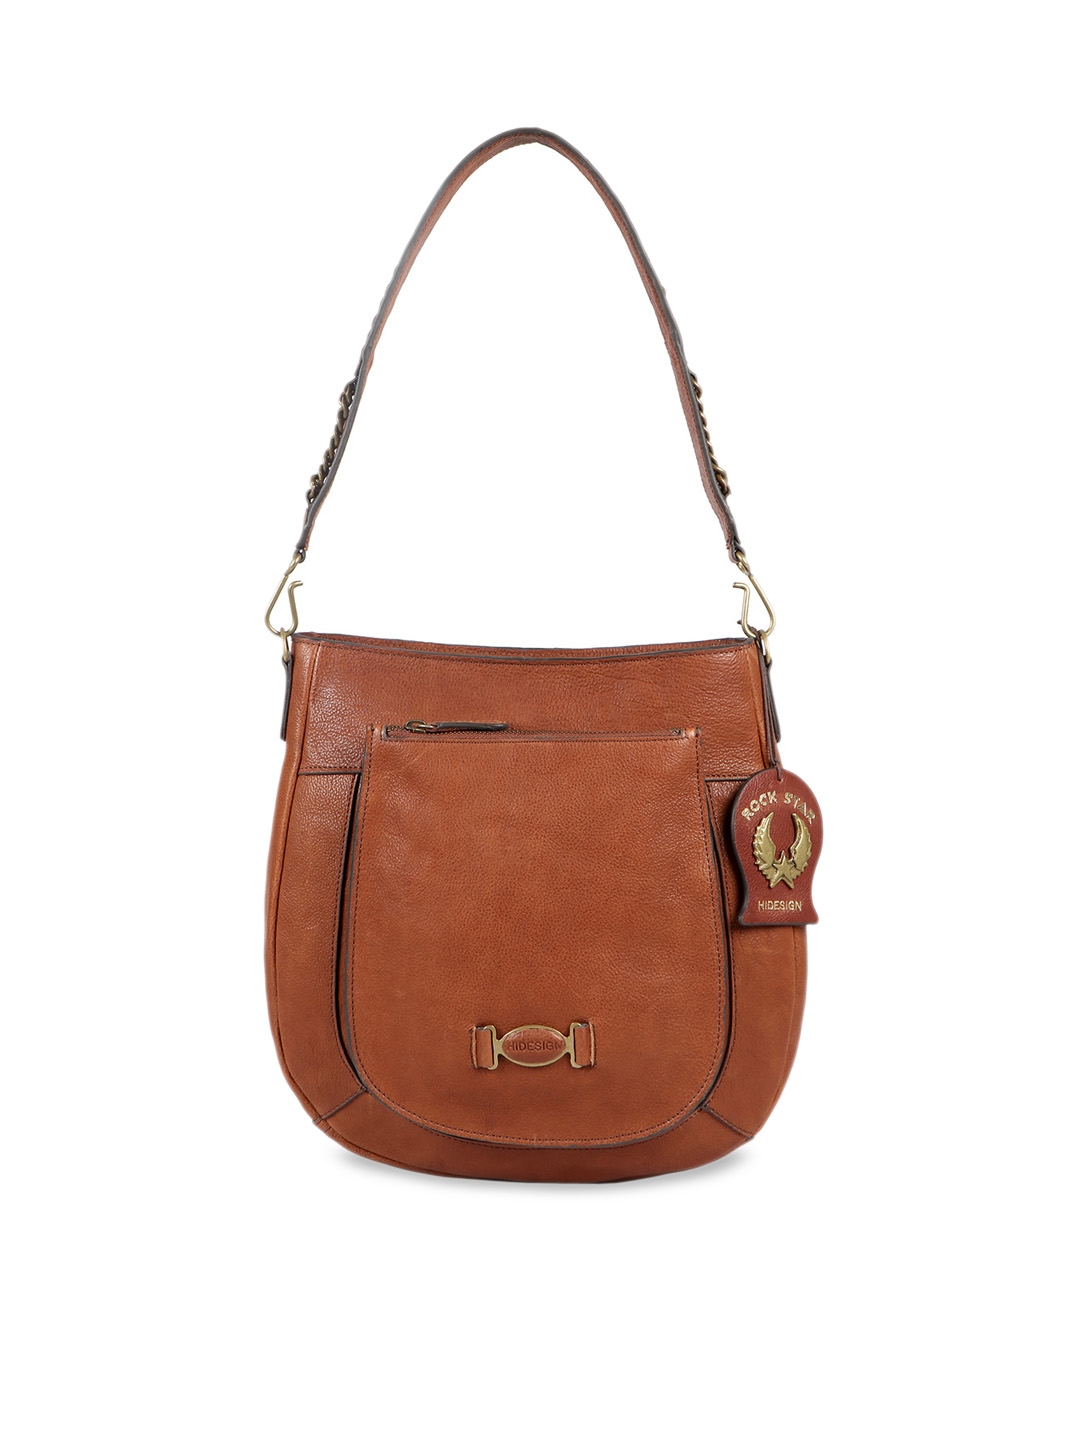 Hidesign Women Tan Brown Solid Leather Shoulder Bag